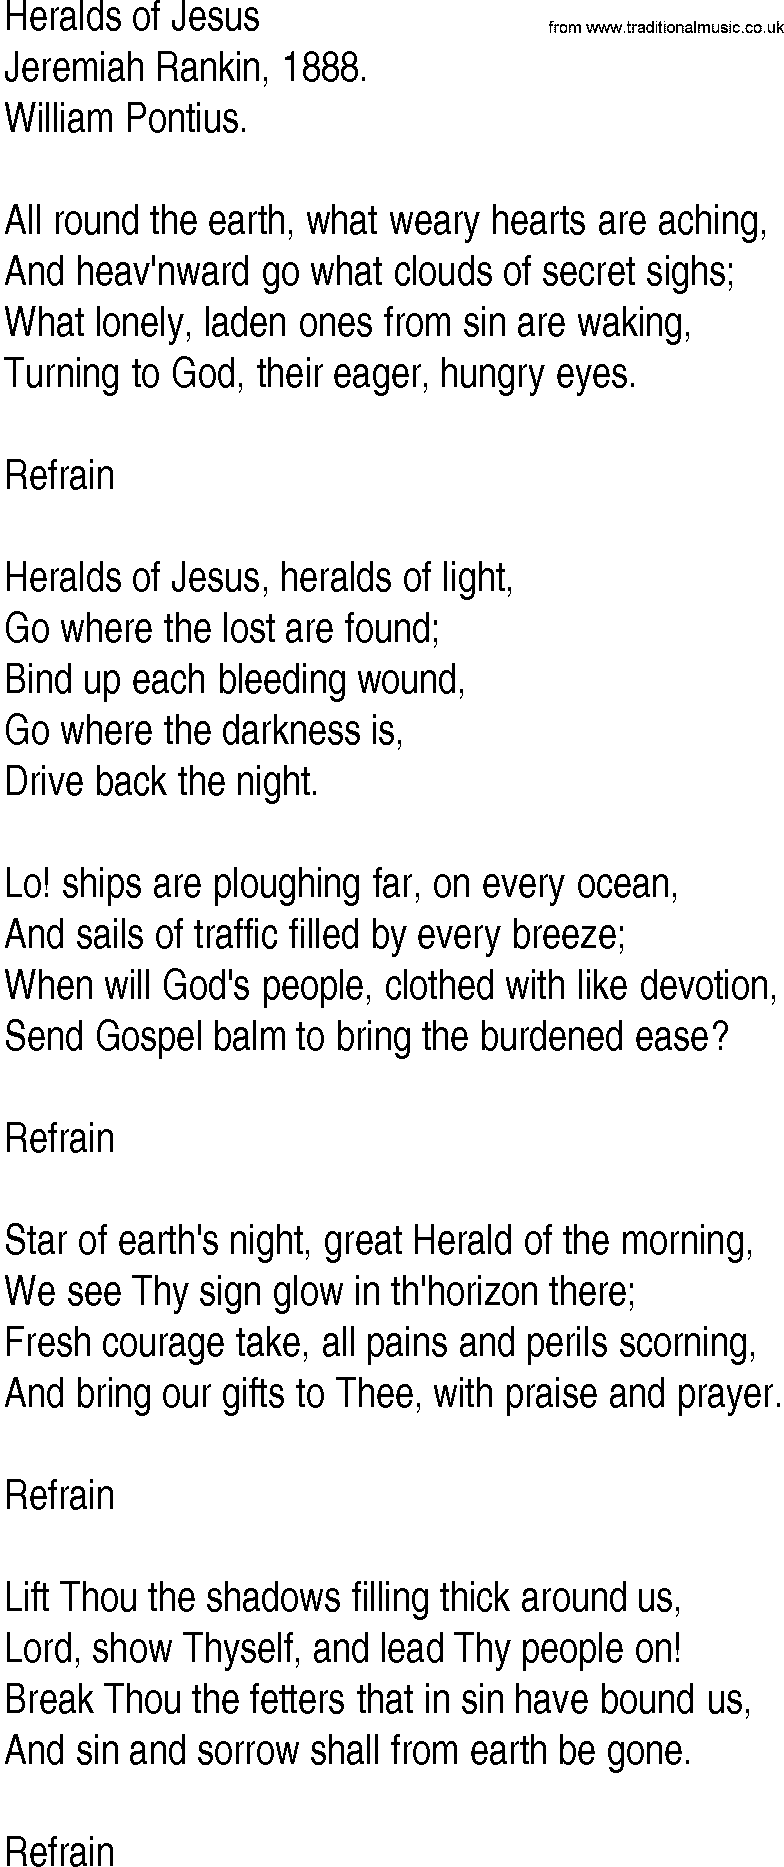 Hymn and Gospel Song: Heralds of Jesus by Jeremiah Rankin lyrics